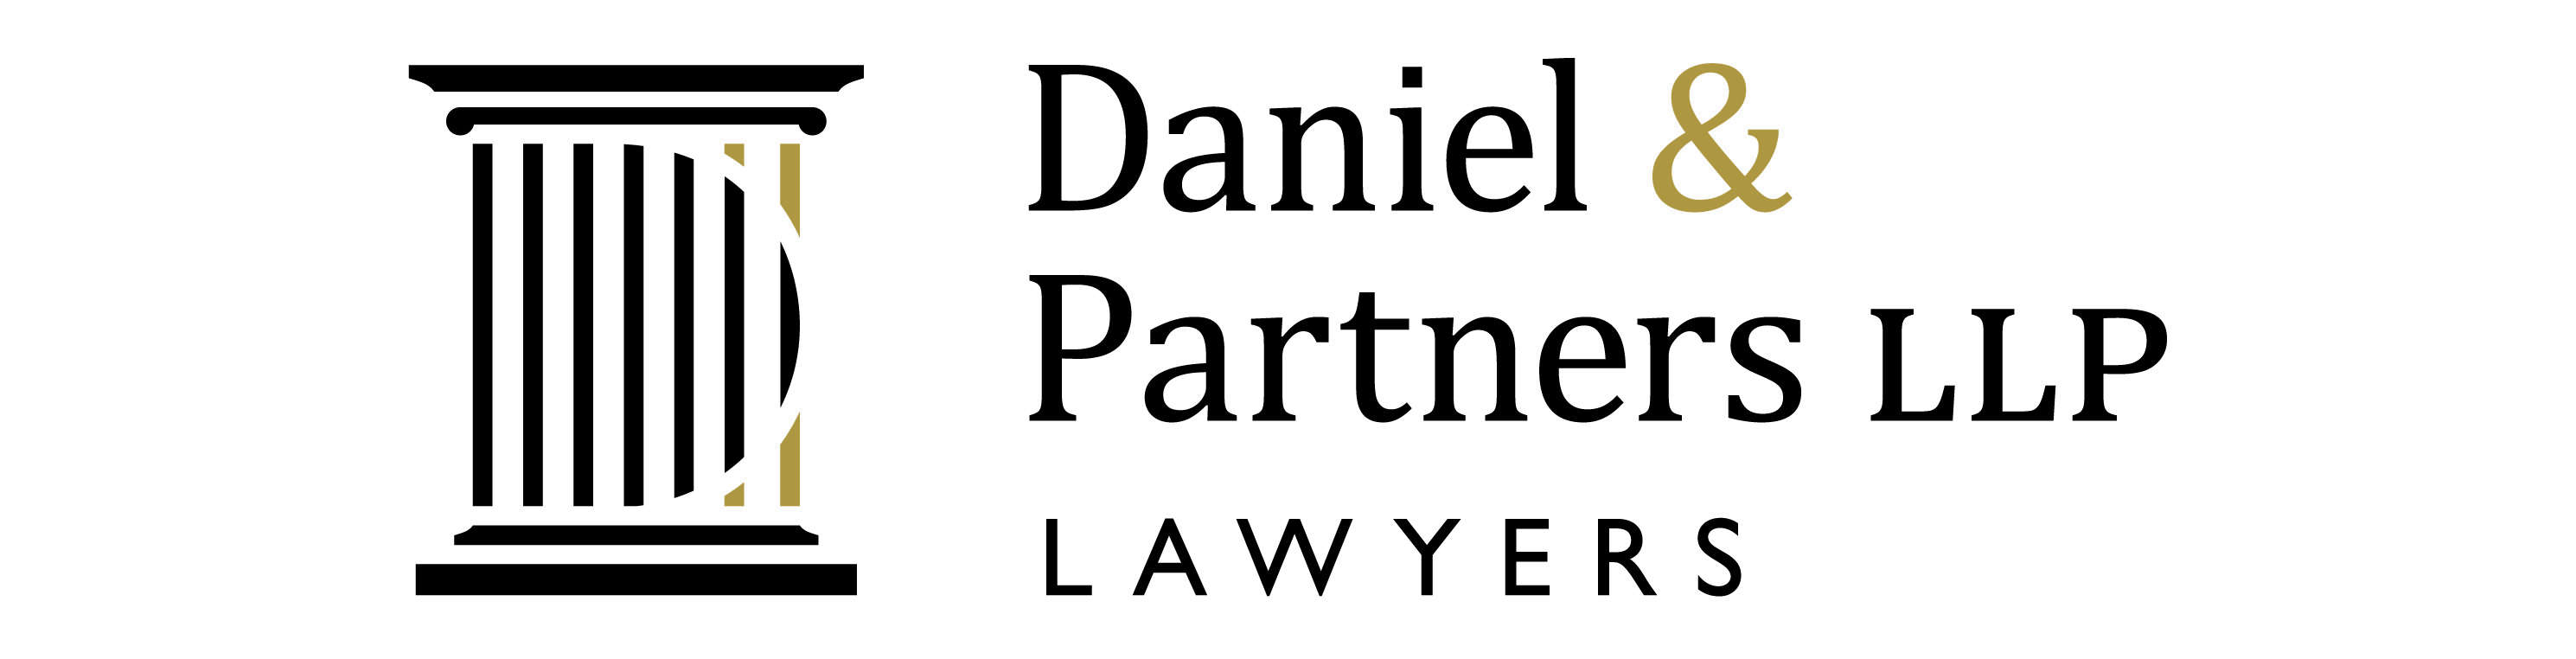 Daniel & Partners LLP